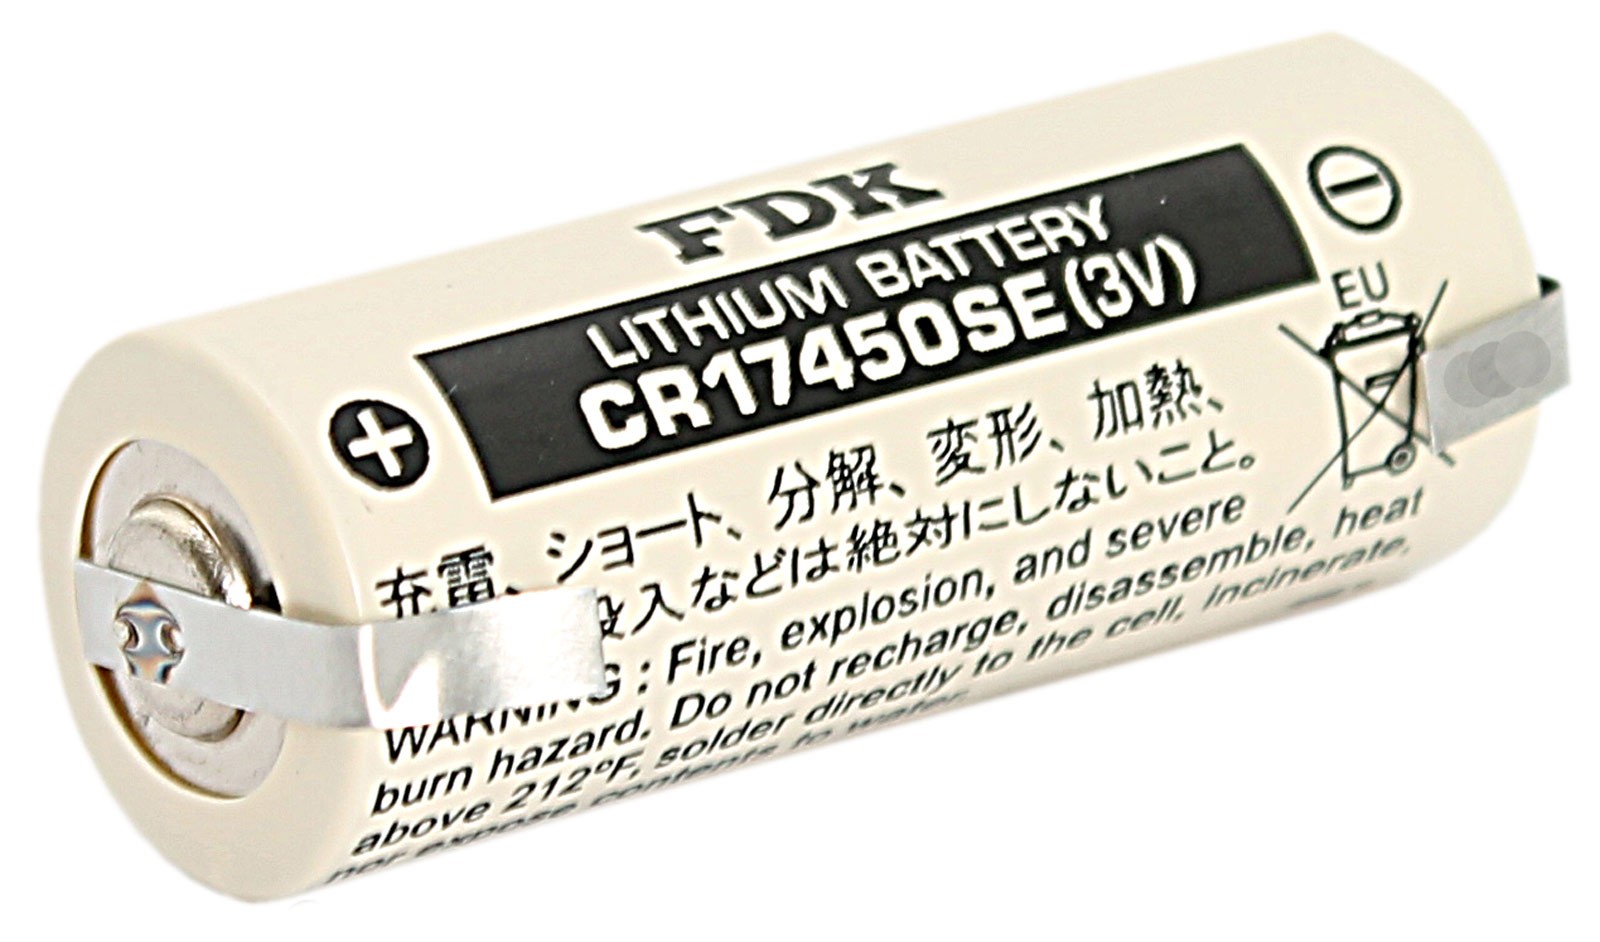 FDK (Sanyo) CR17450SE (CR17450SE-LFU)  A Lithium-Mangandioxid Batterie, Flat Top, Industriezelle, U-Lötfahne mit 3 Volt und 2500 mAh Kapazität